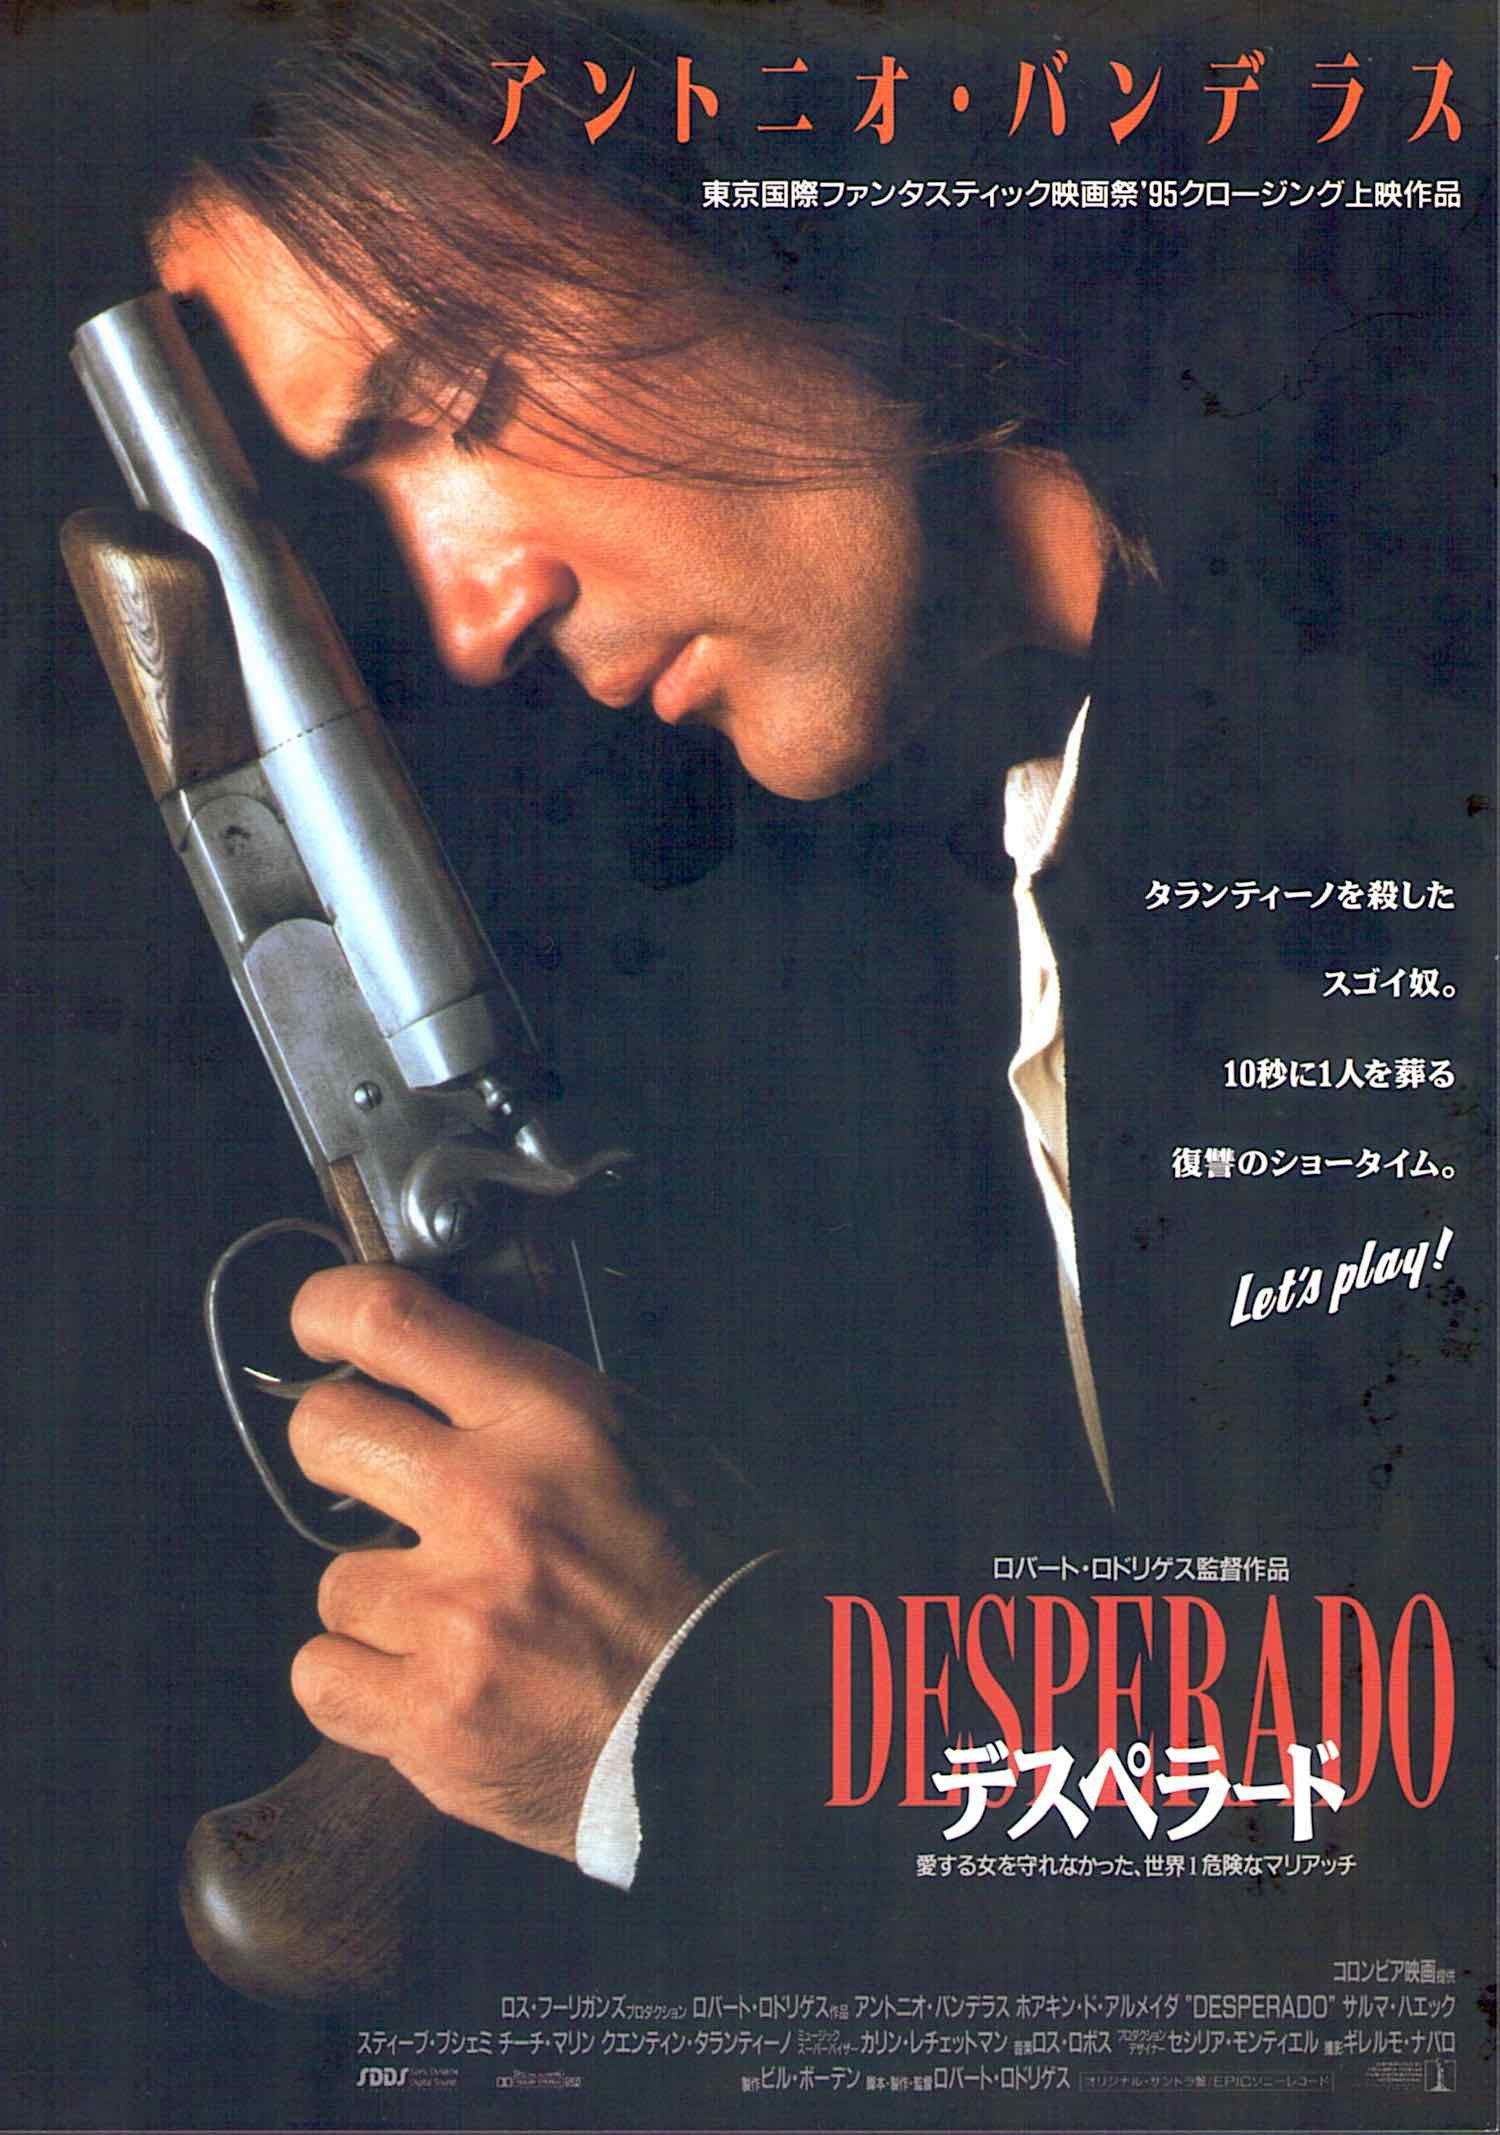 ameya banavali recommends Watch Desperado Full Movie